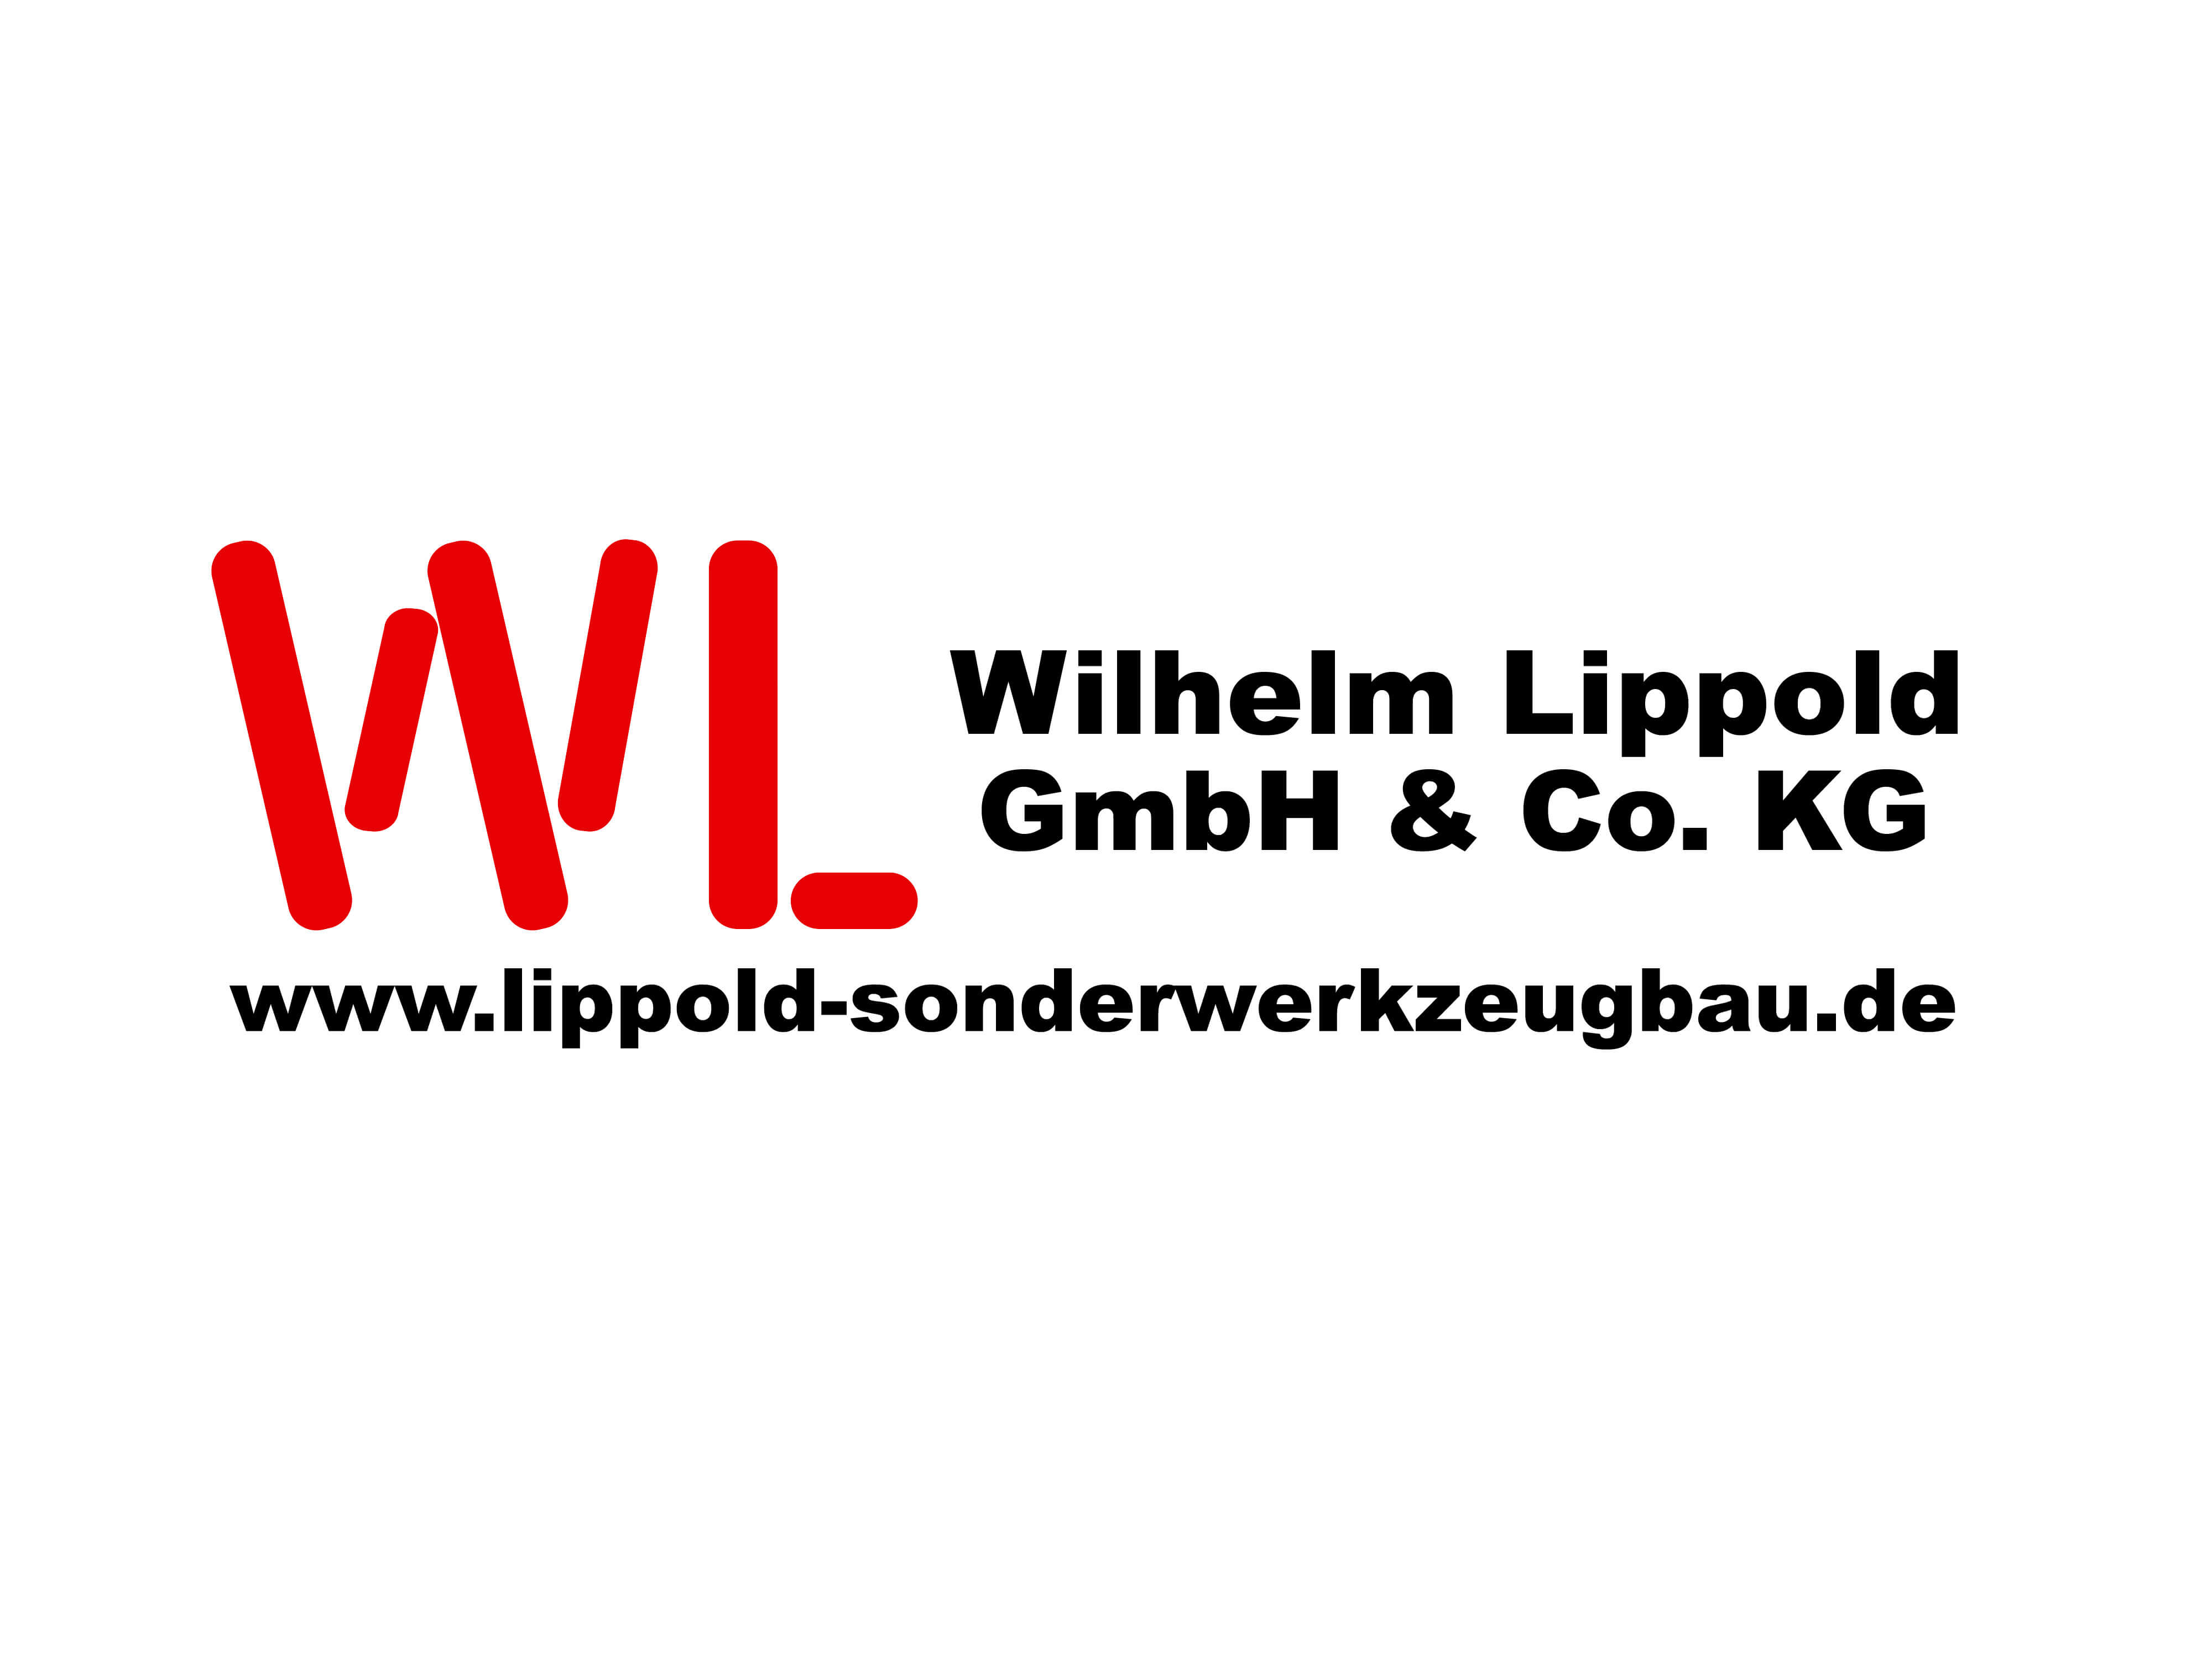 Wilhelm Lippold GmbH & Co KG